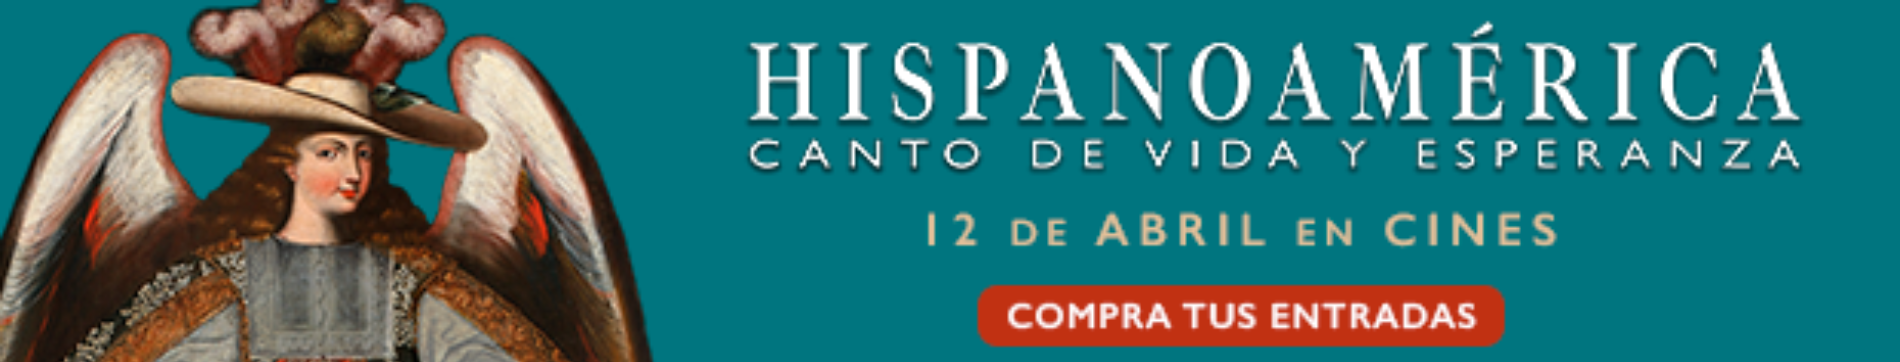 Hispanoamerica 1900 x 362